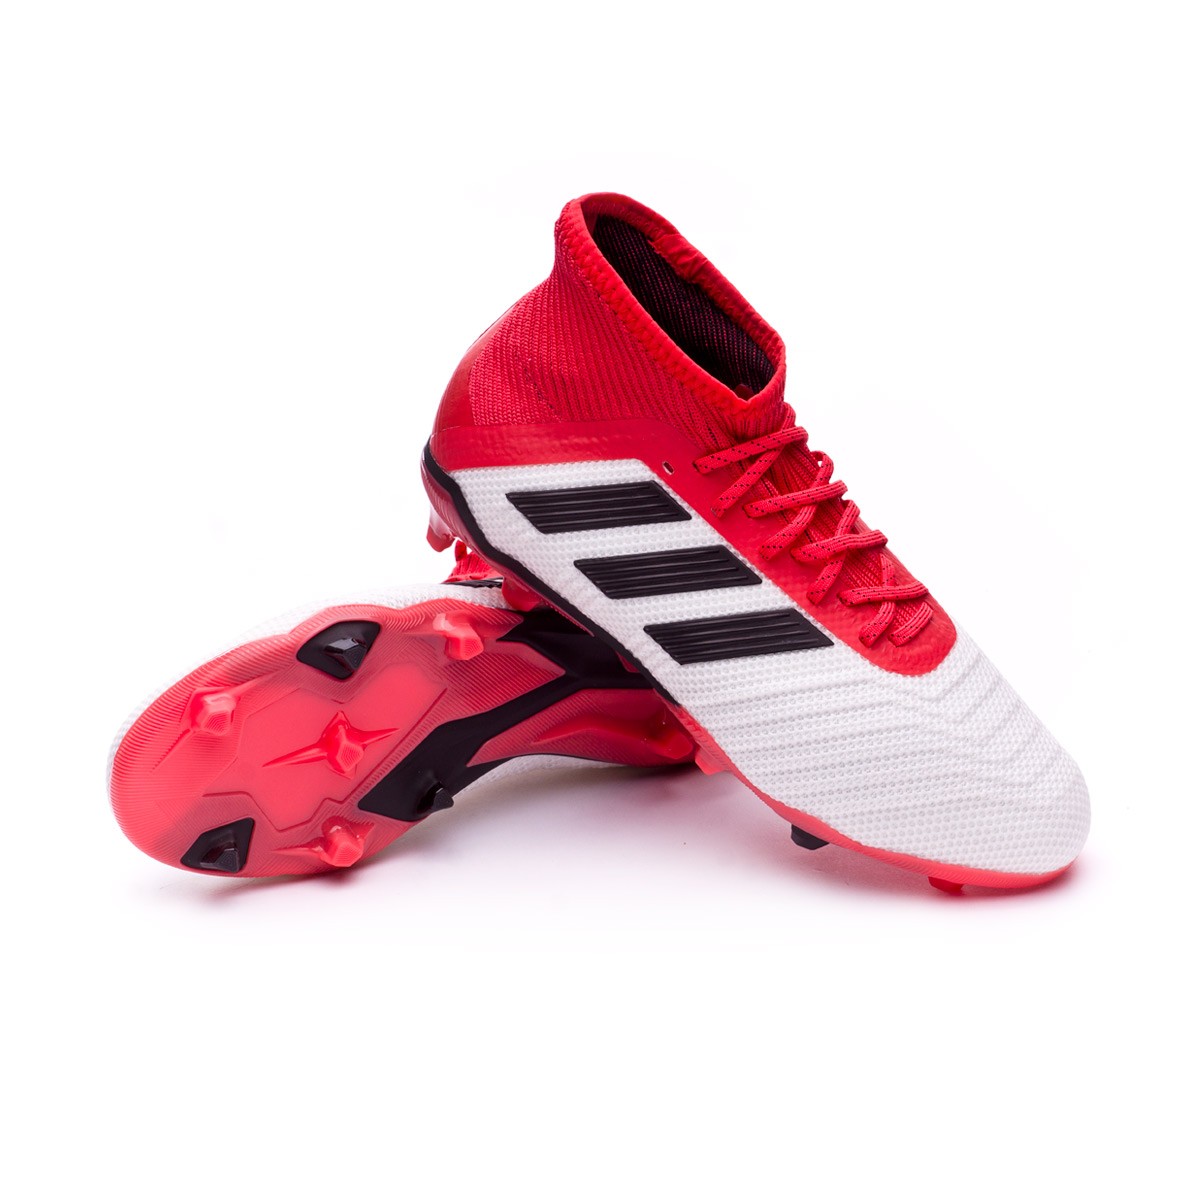 Bota de fútbol adidas Predator 18.1 FG Niño White-Core black-Real coral -  Tienda de fútbol Fútbol Emotion